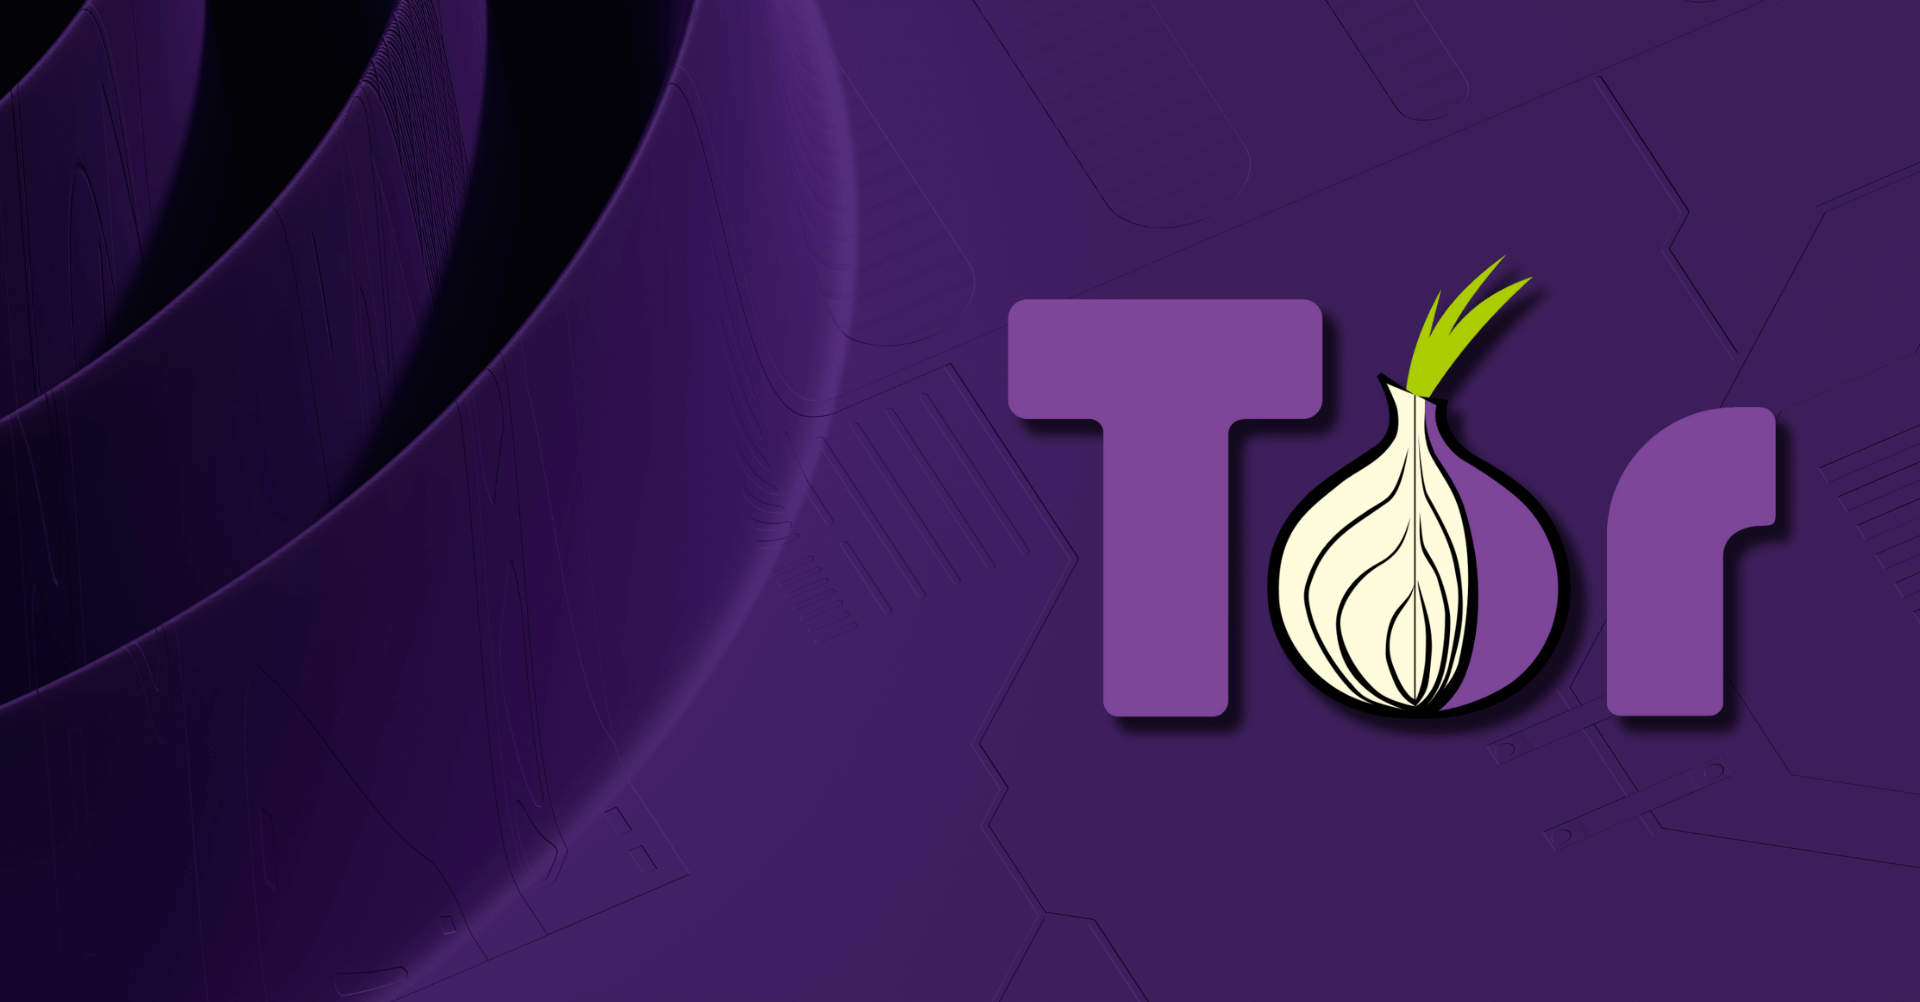 Support Internet Freedom: Run a Tor Relay